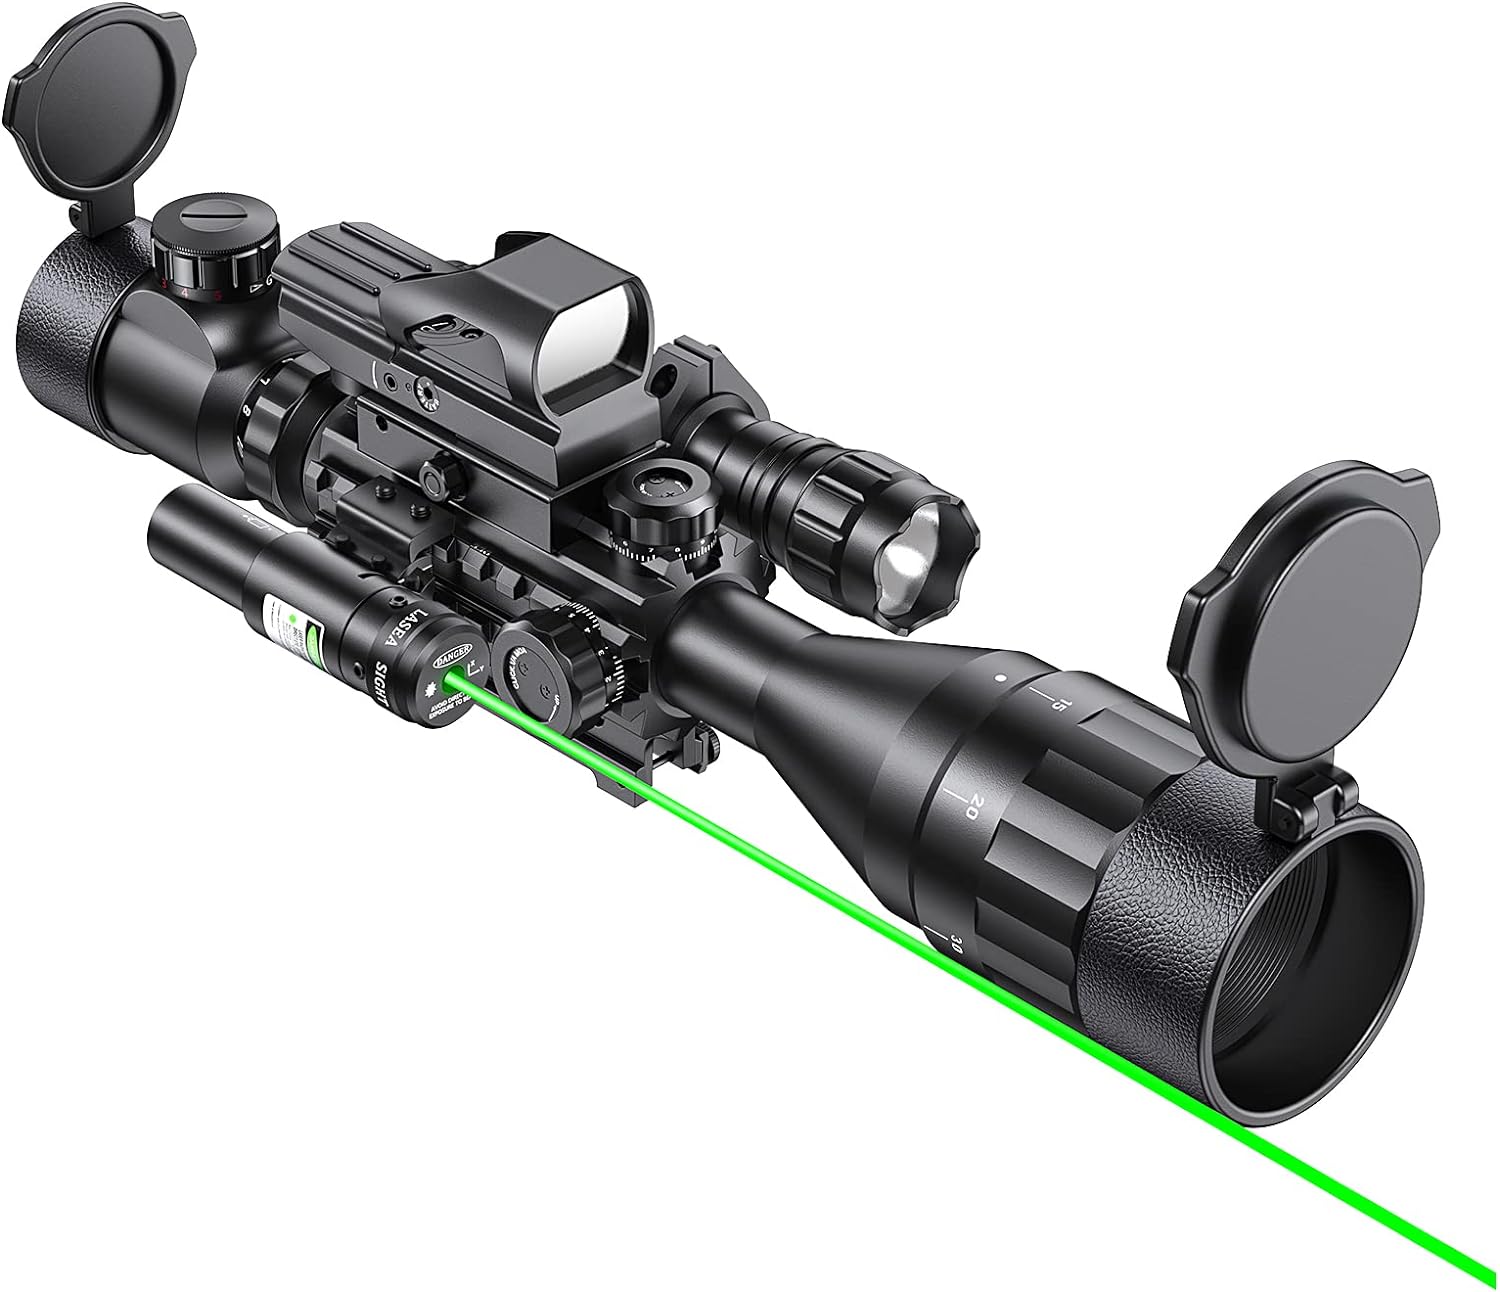 Beileshi 20mm (Picatinny) Rail Green/Red Dot Sight Hunting Tactical Ho